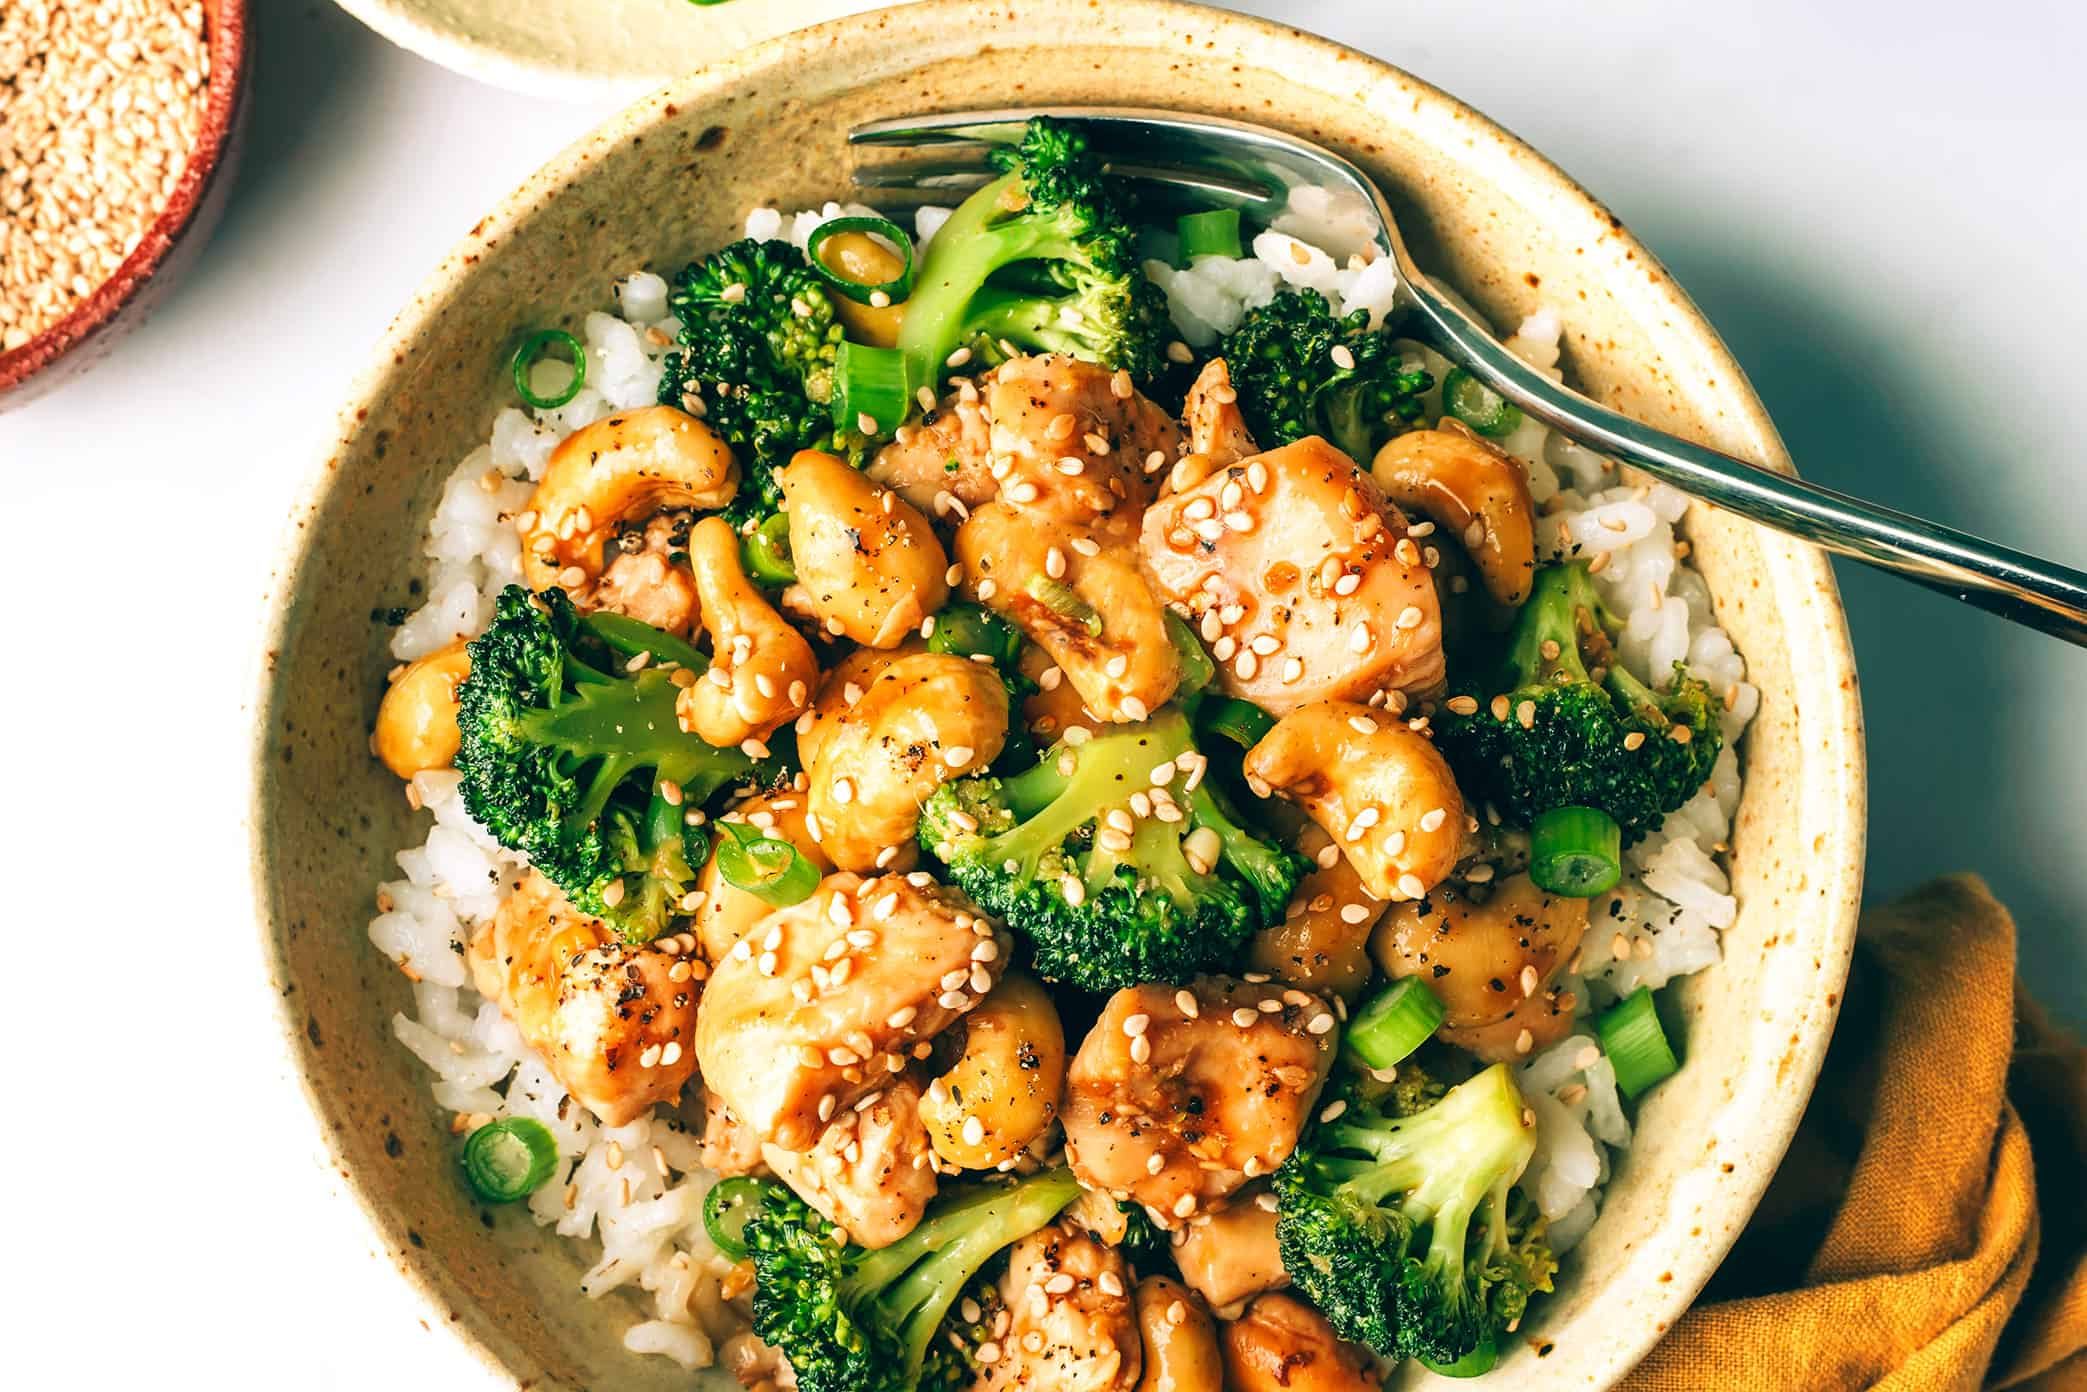 Chicken and Broccoli Stir-Fry Recipe Details